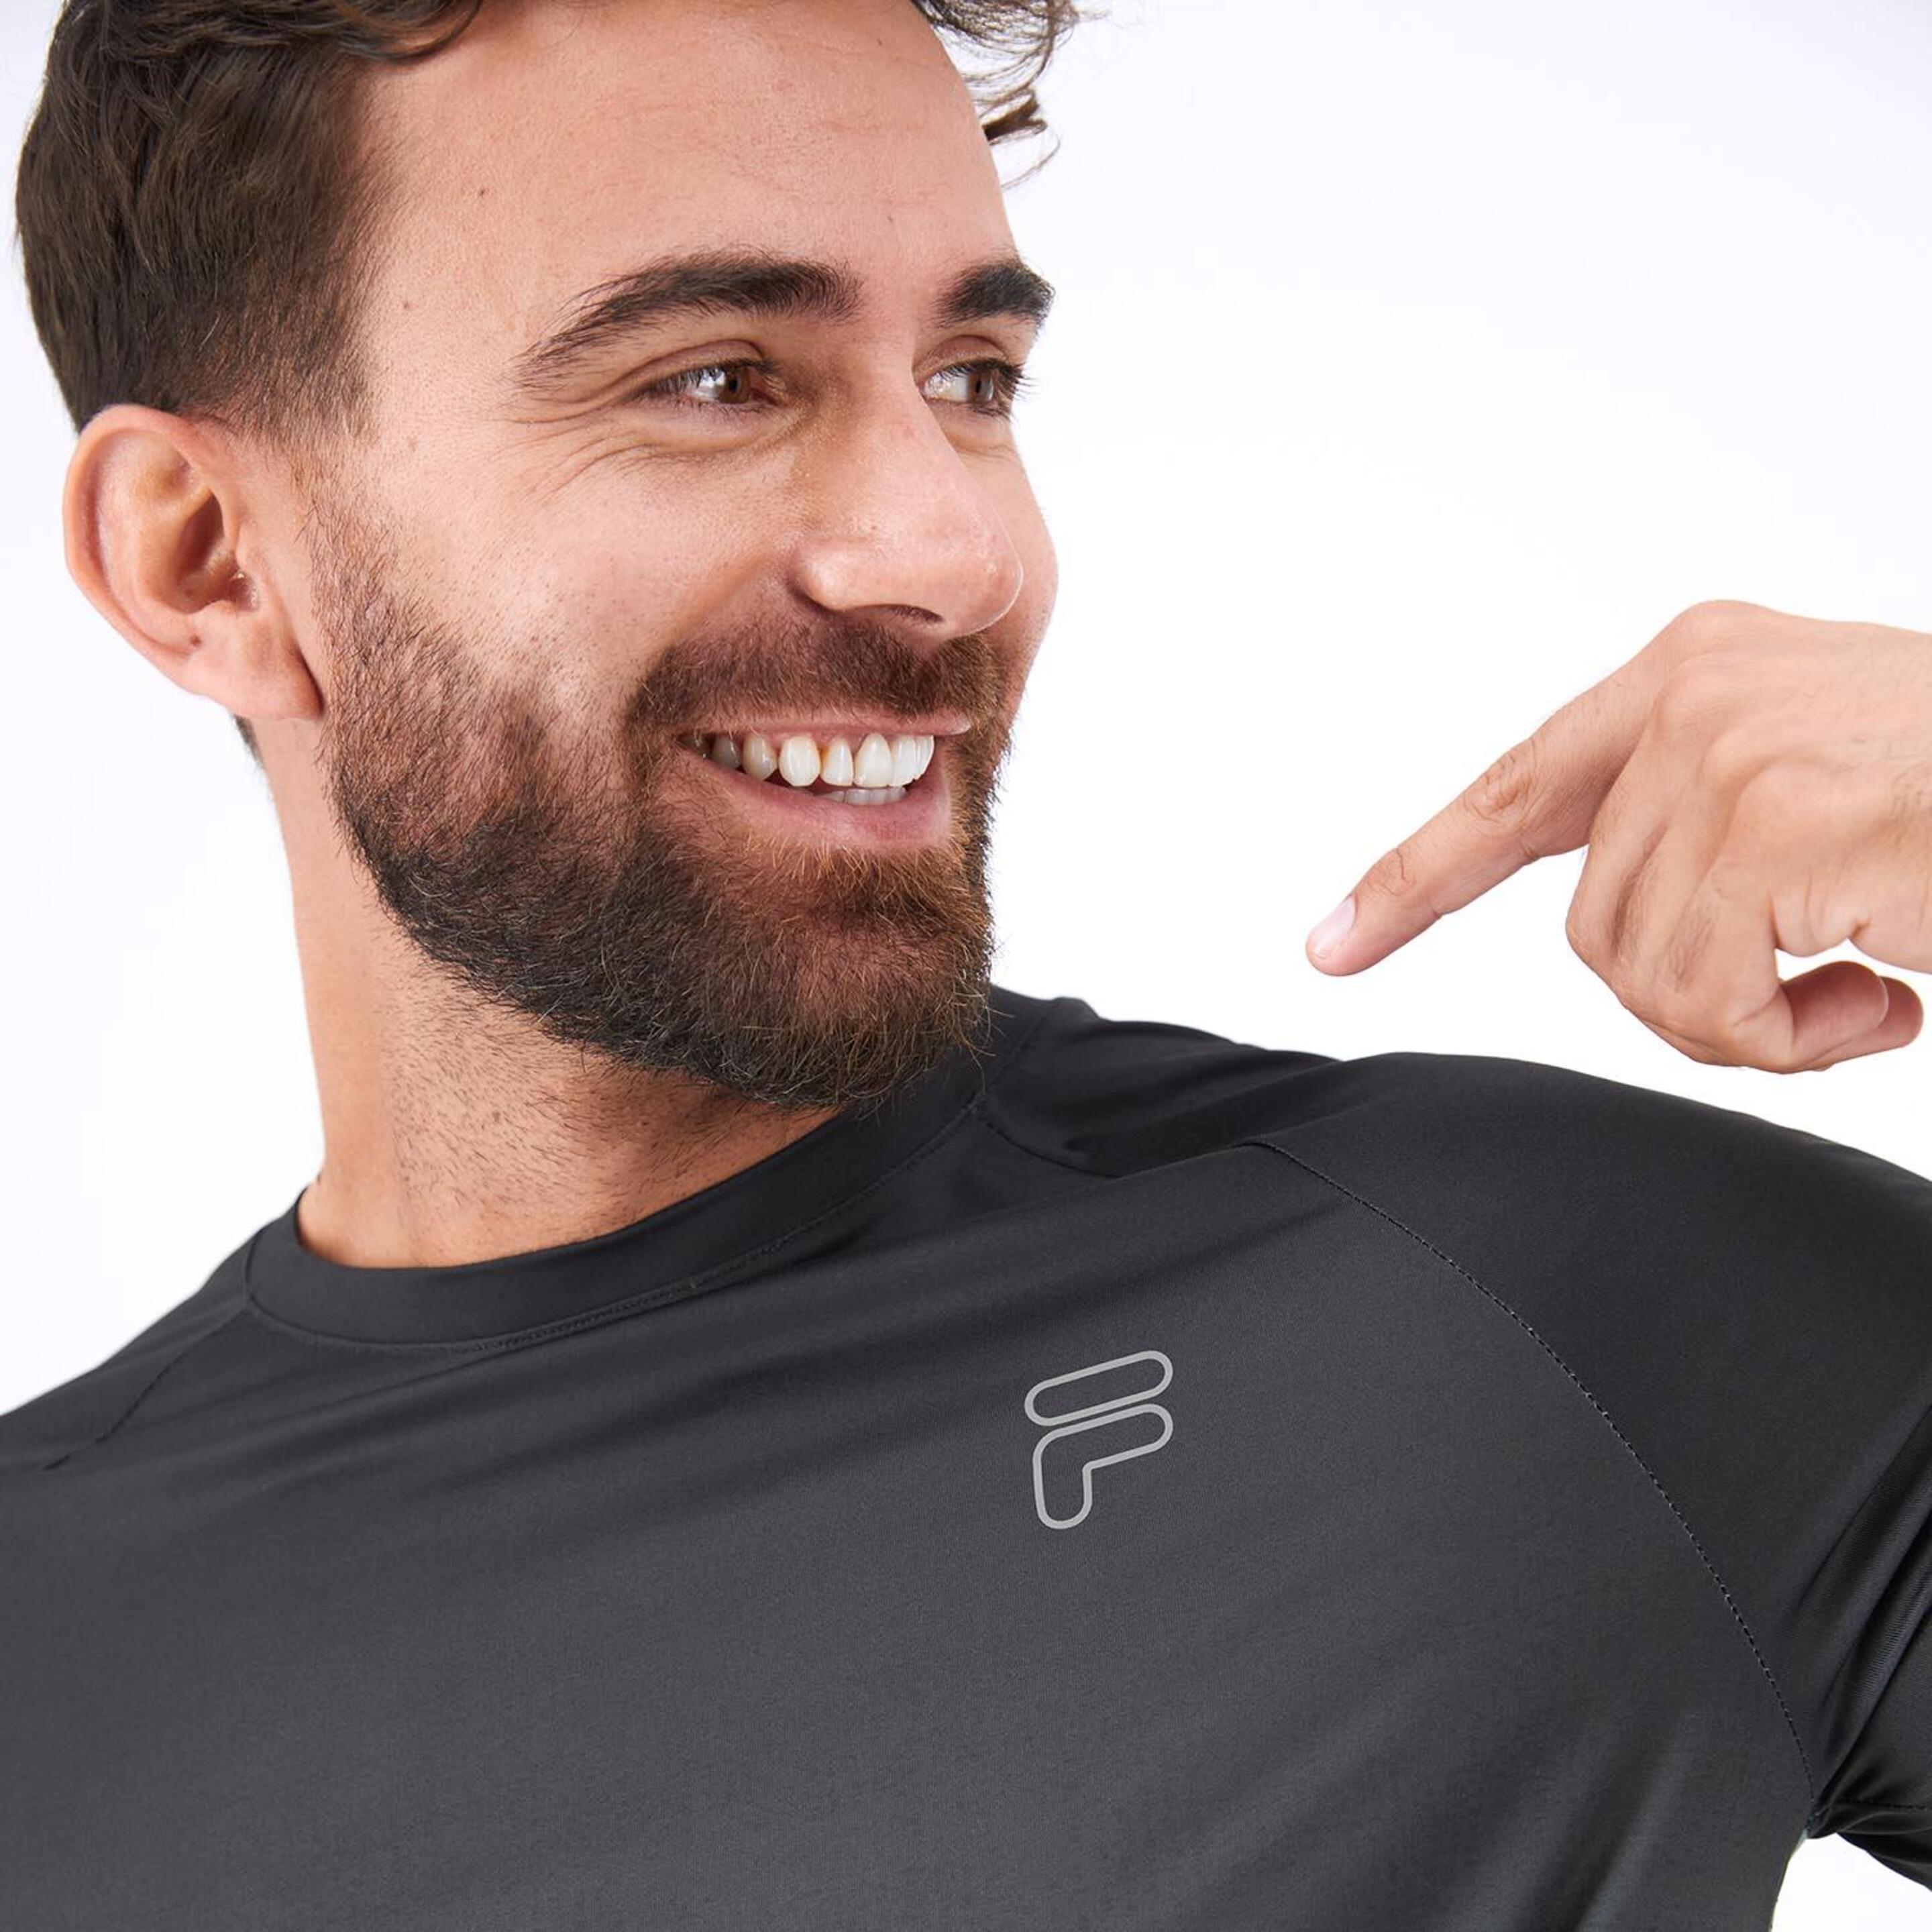 Fila Training - Caqui - T-shirt Running Homem | Sport Zone